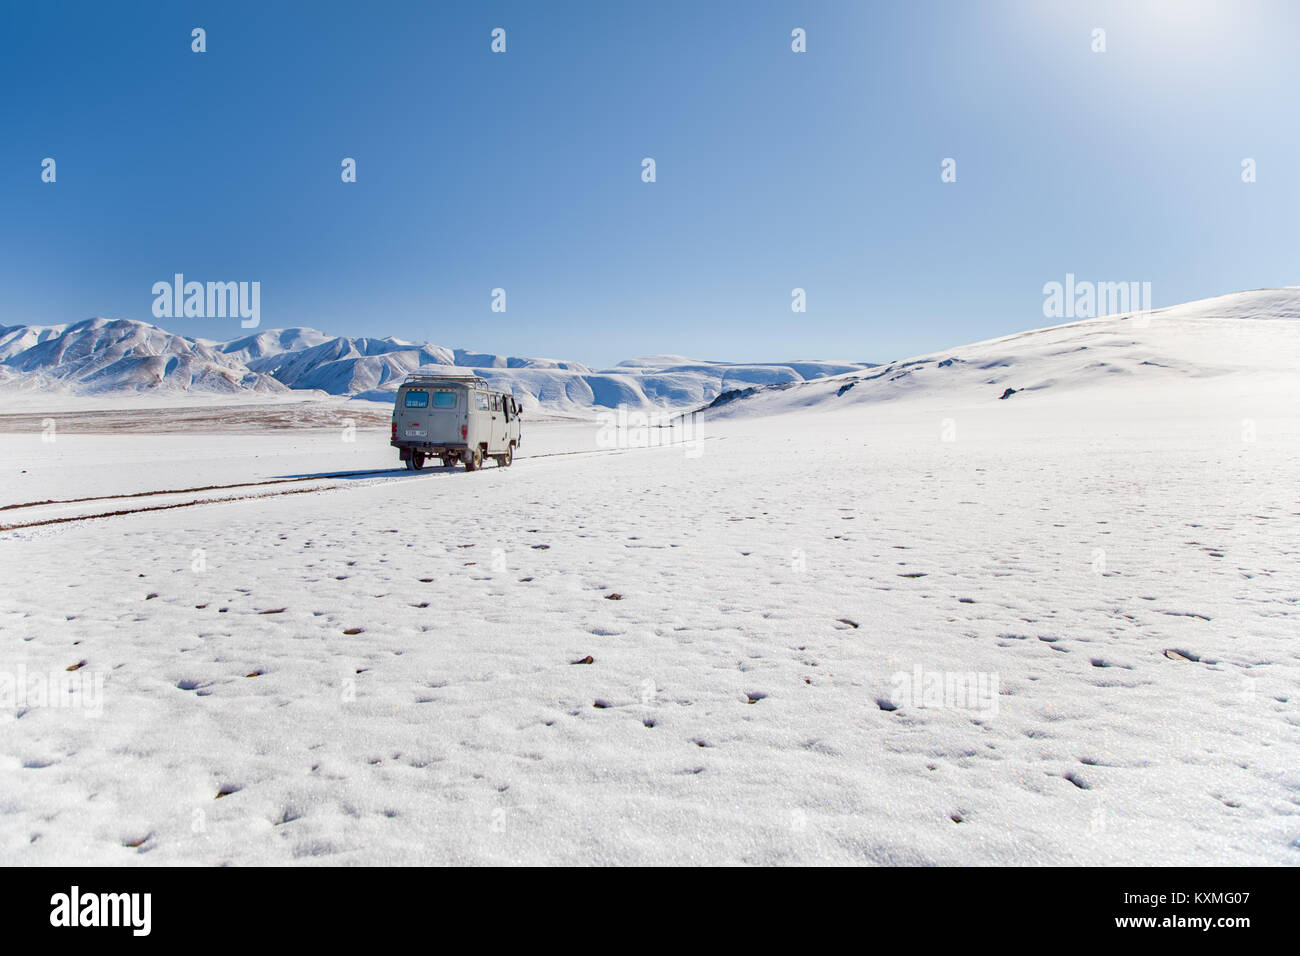 Il russo van UAZ 452 camper dslr lengs zoom sigma 150-600mm neve inverno Mongolia montagne innevate Foto Stock